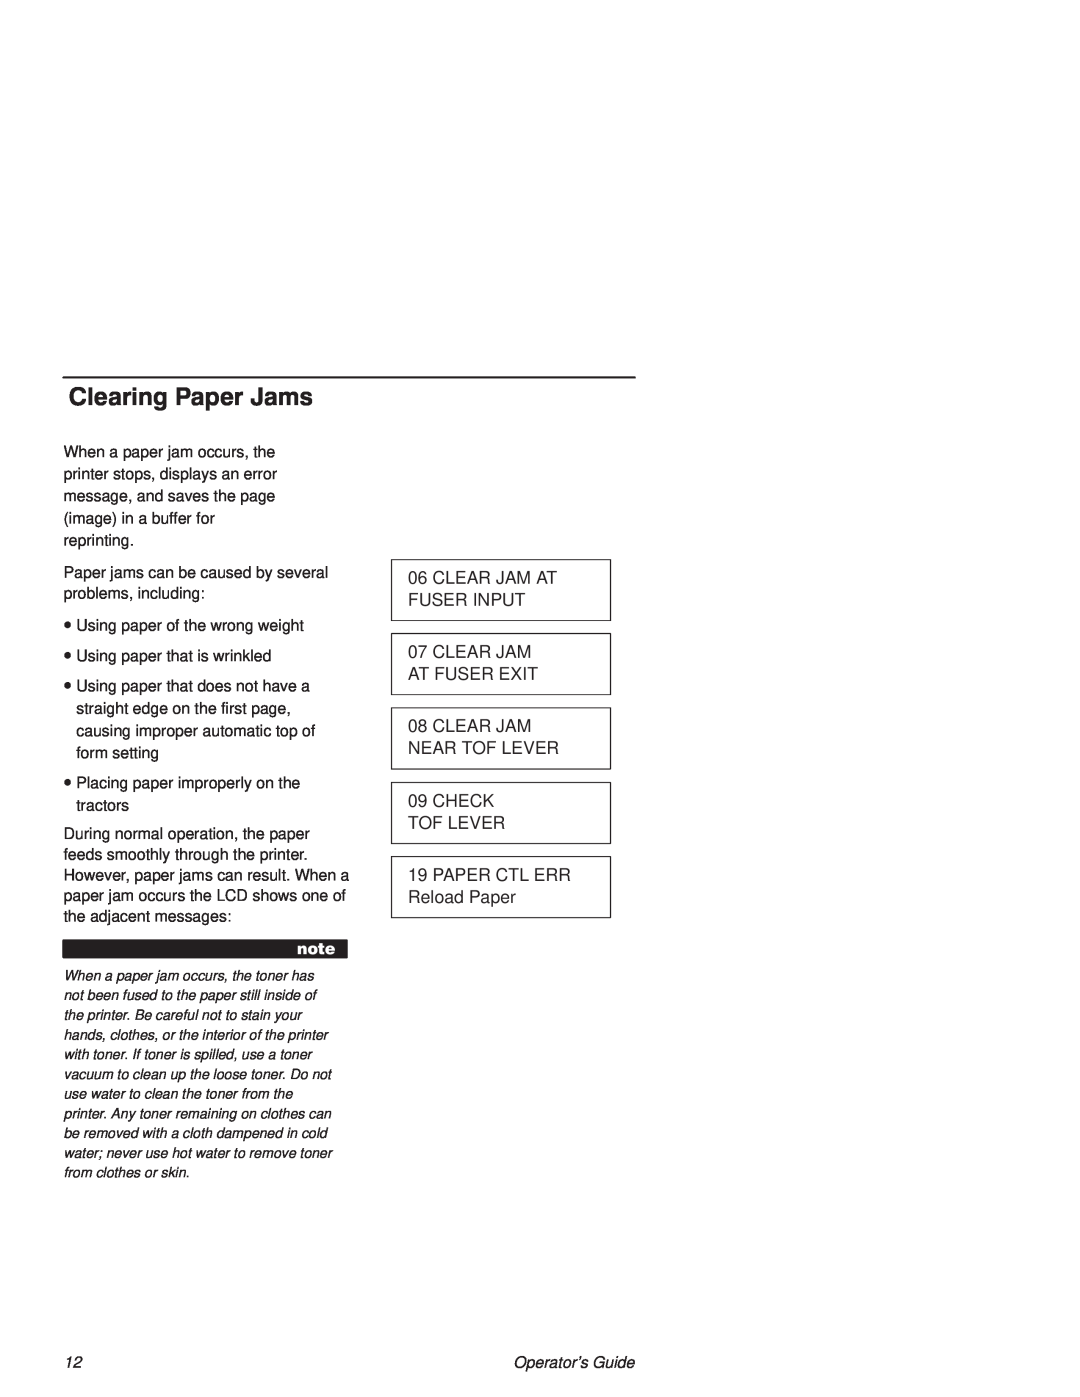 Printronix L1524 manual learing Paper Jams, CLEAR JAM AT FUSER INPUT 07 CLEAR JAM AT FUSER EXIT, PAPER CTL ERR Reload Paper 